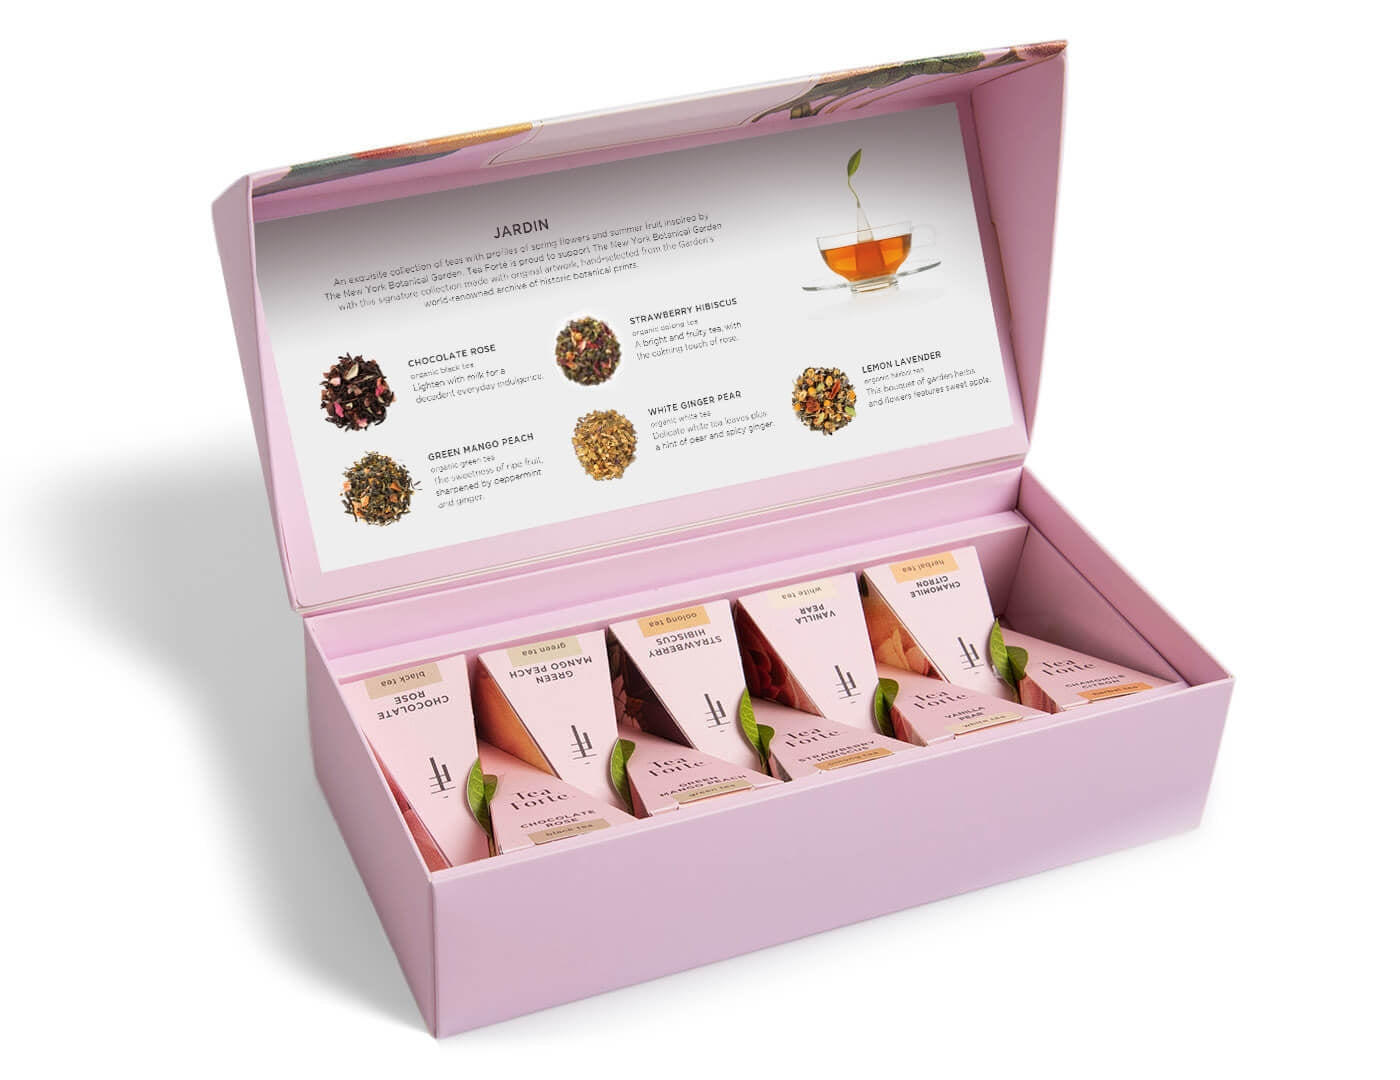 Jardin tea assortment in a 10 count petite presentation box with lid open